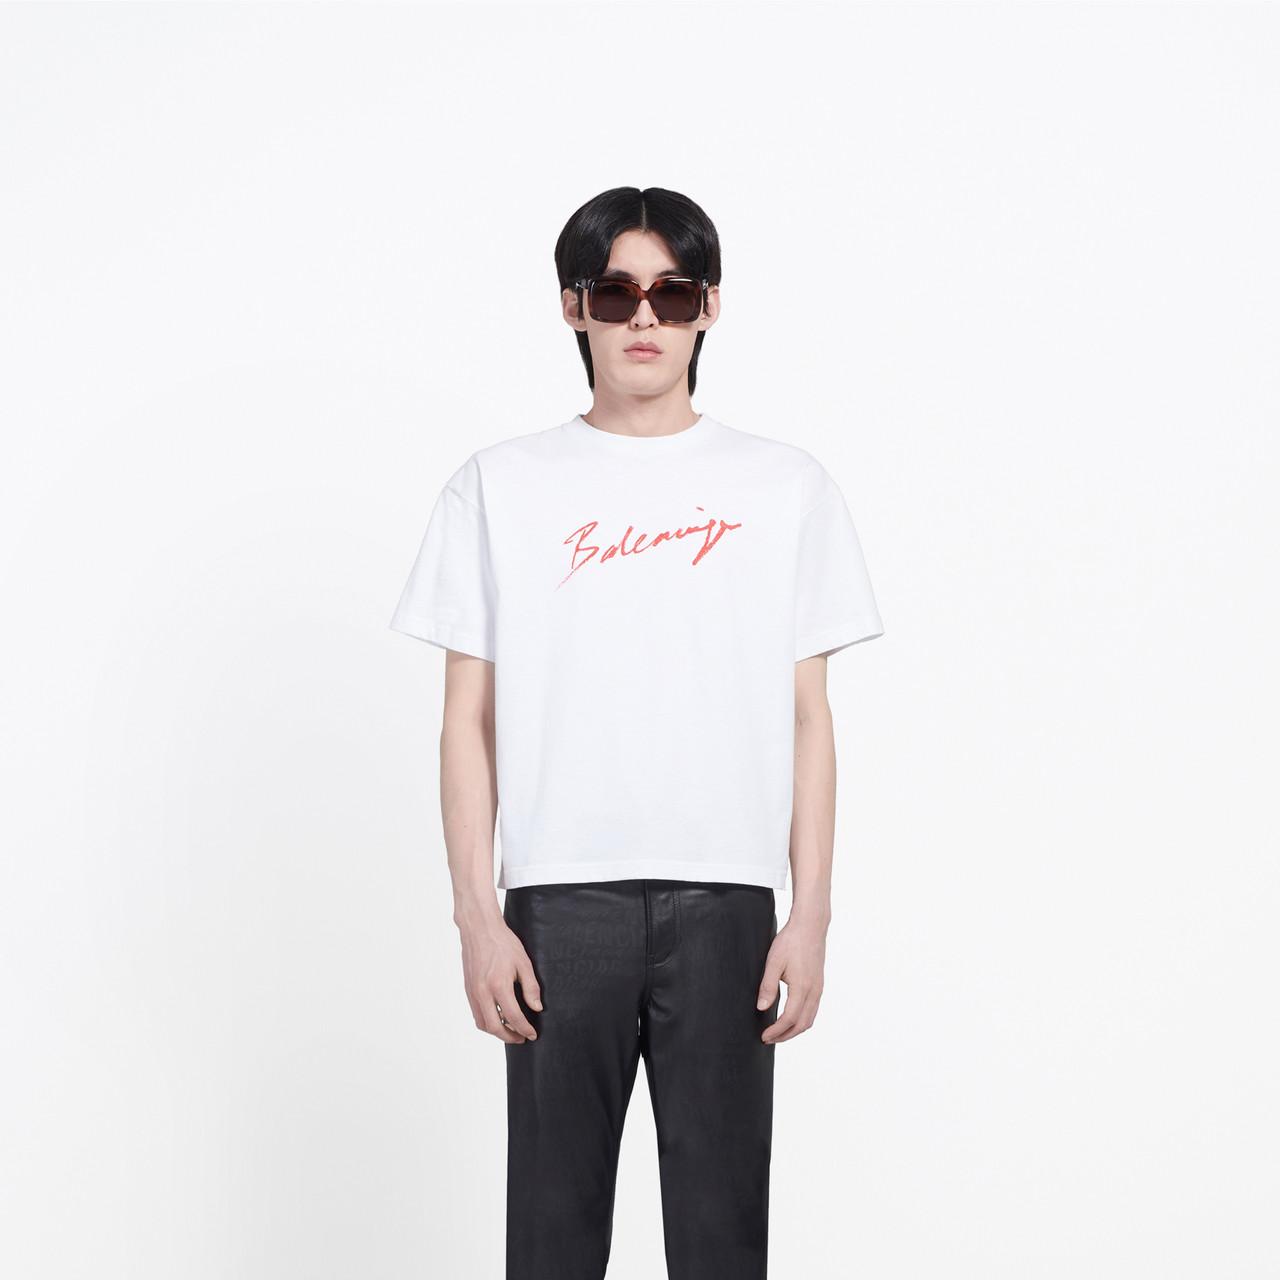 Balenciaga Cotton Signature T-shirt in White for Men - Lyst